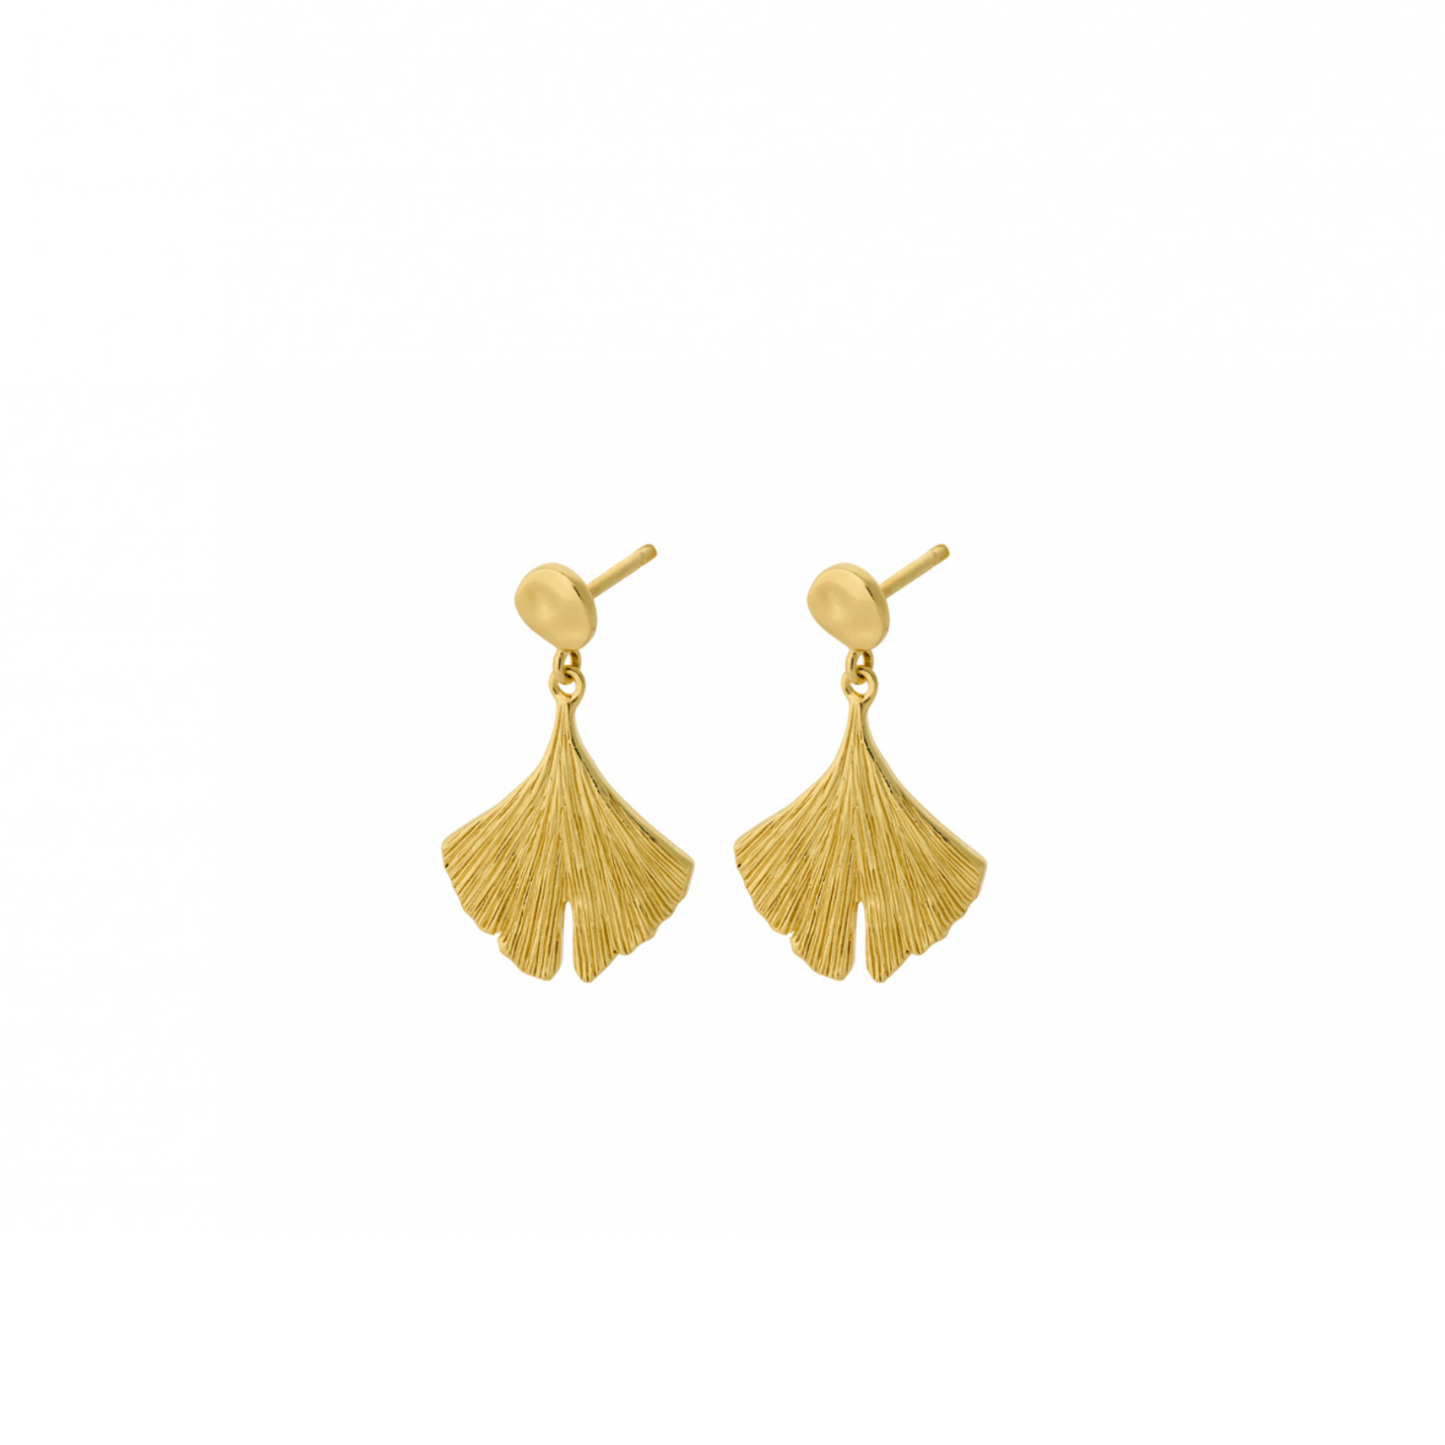 Biloba earrings